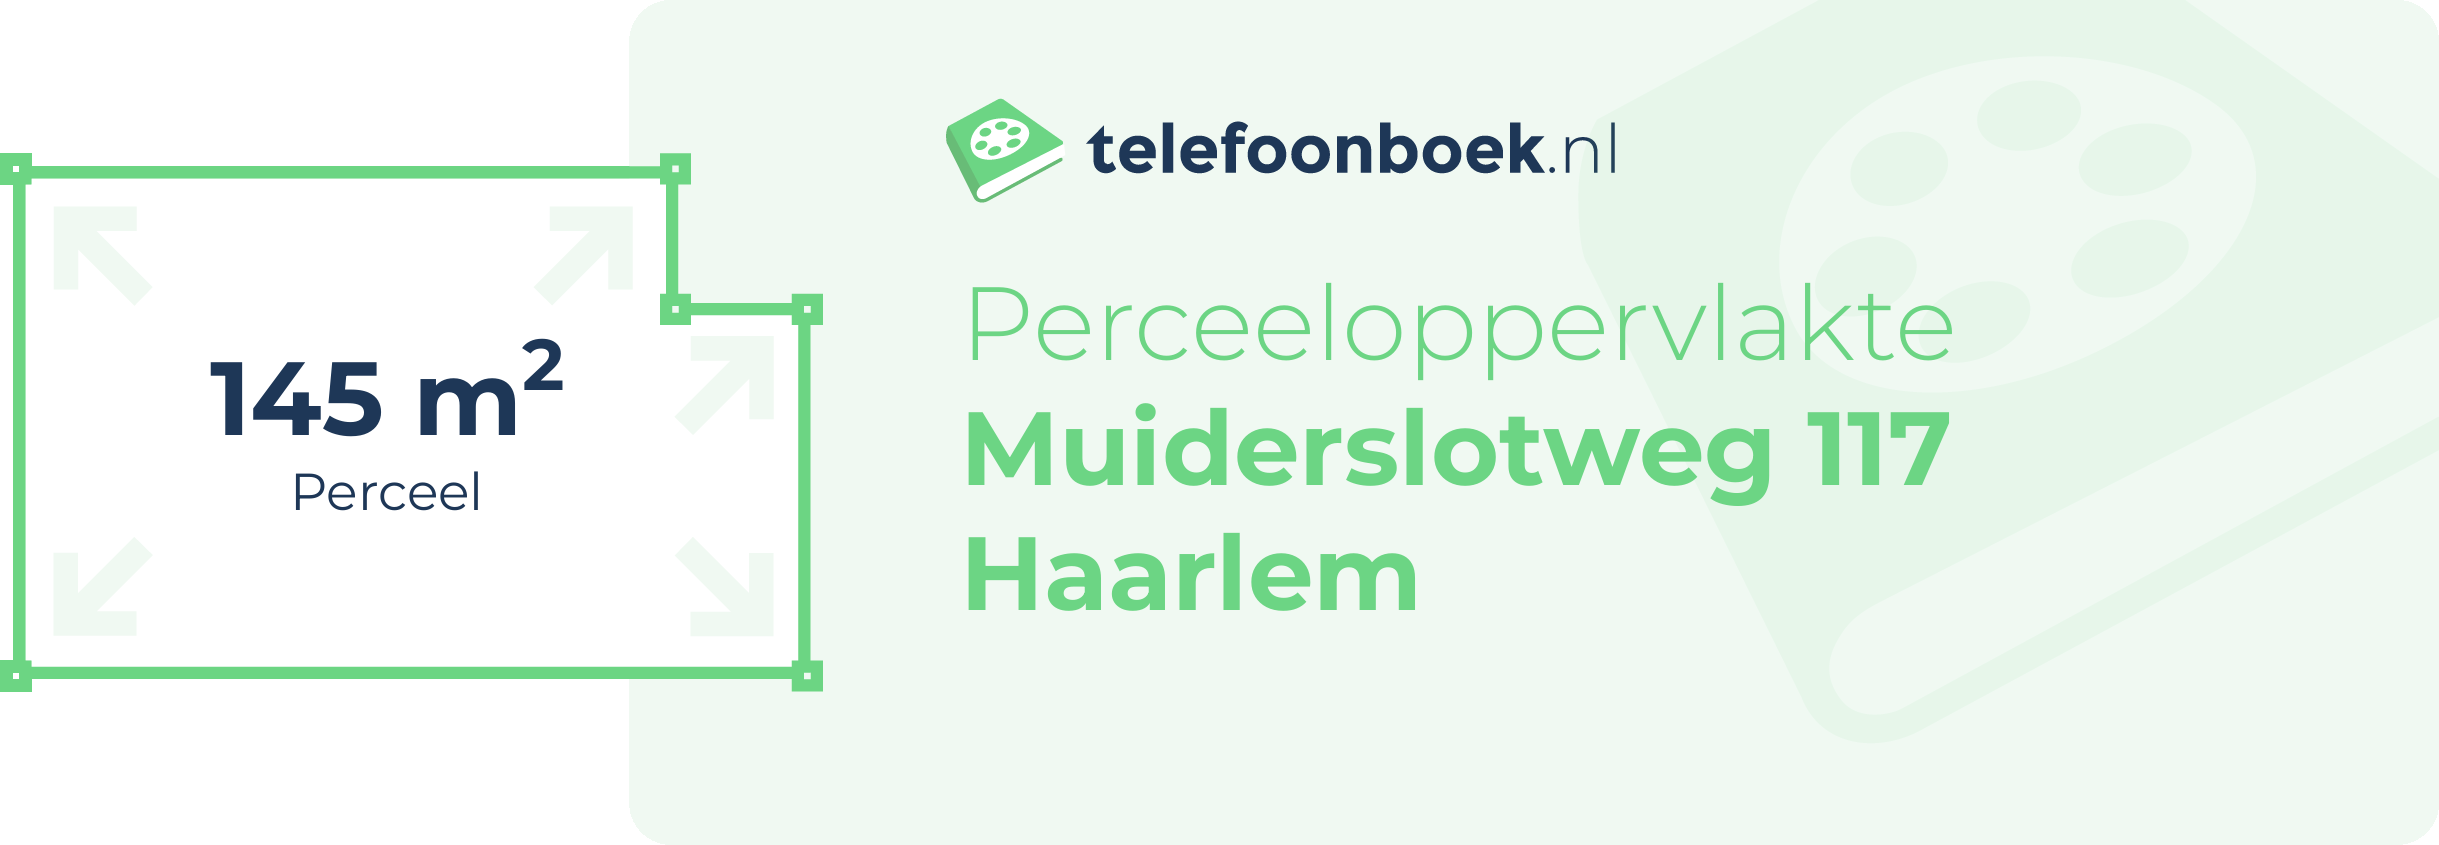 Perceeloppervlakte Muiderslotweg 117 Haarlem